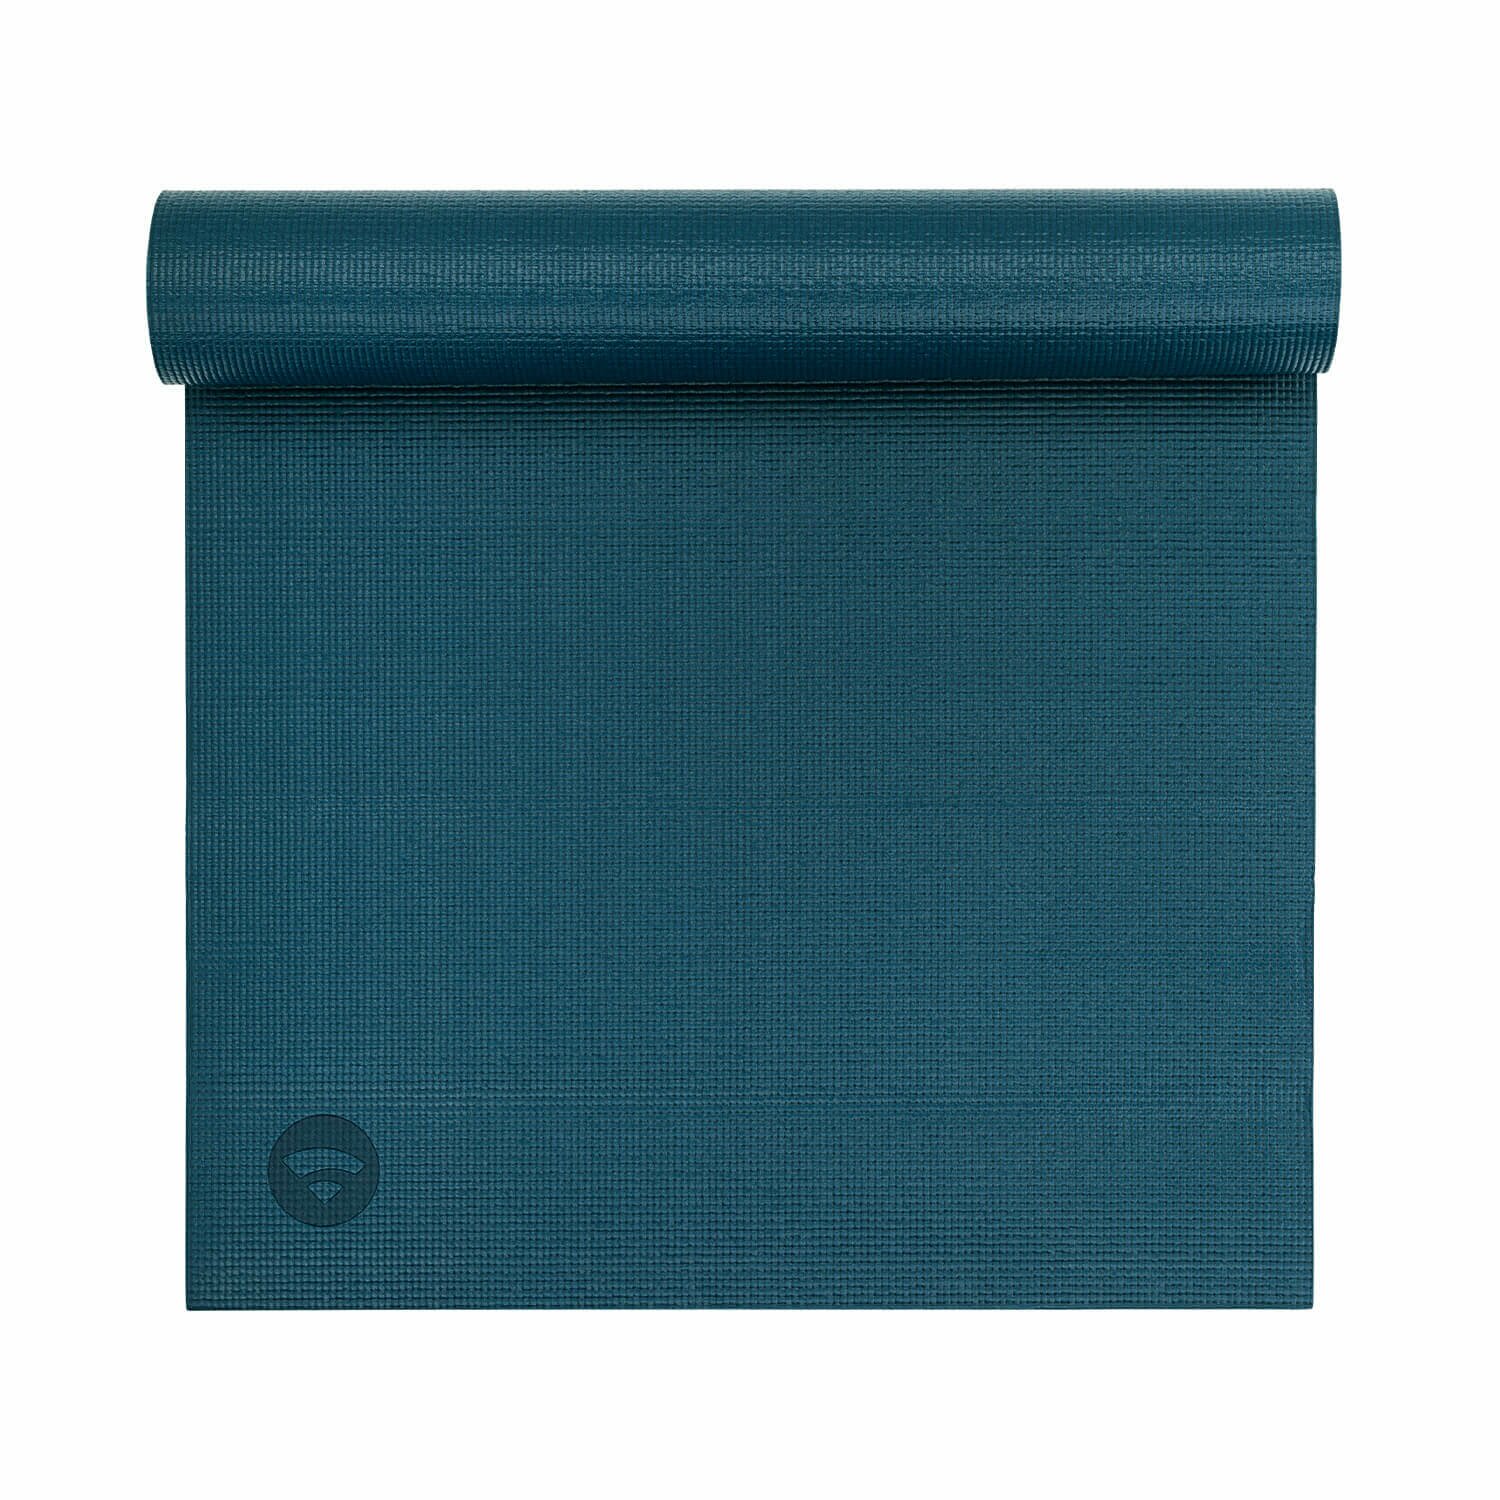 Tapete de yoga Asana - 4.5mm PVC ecológico 3